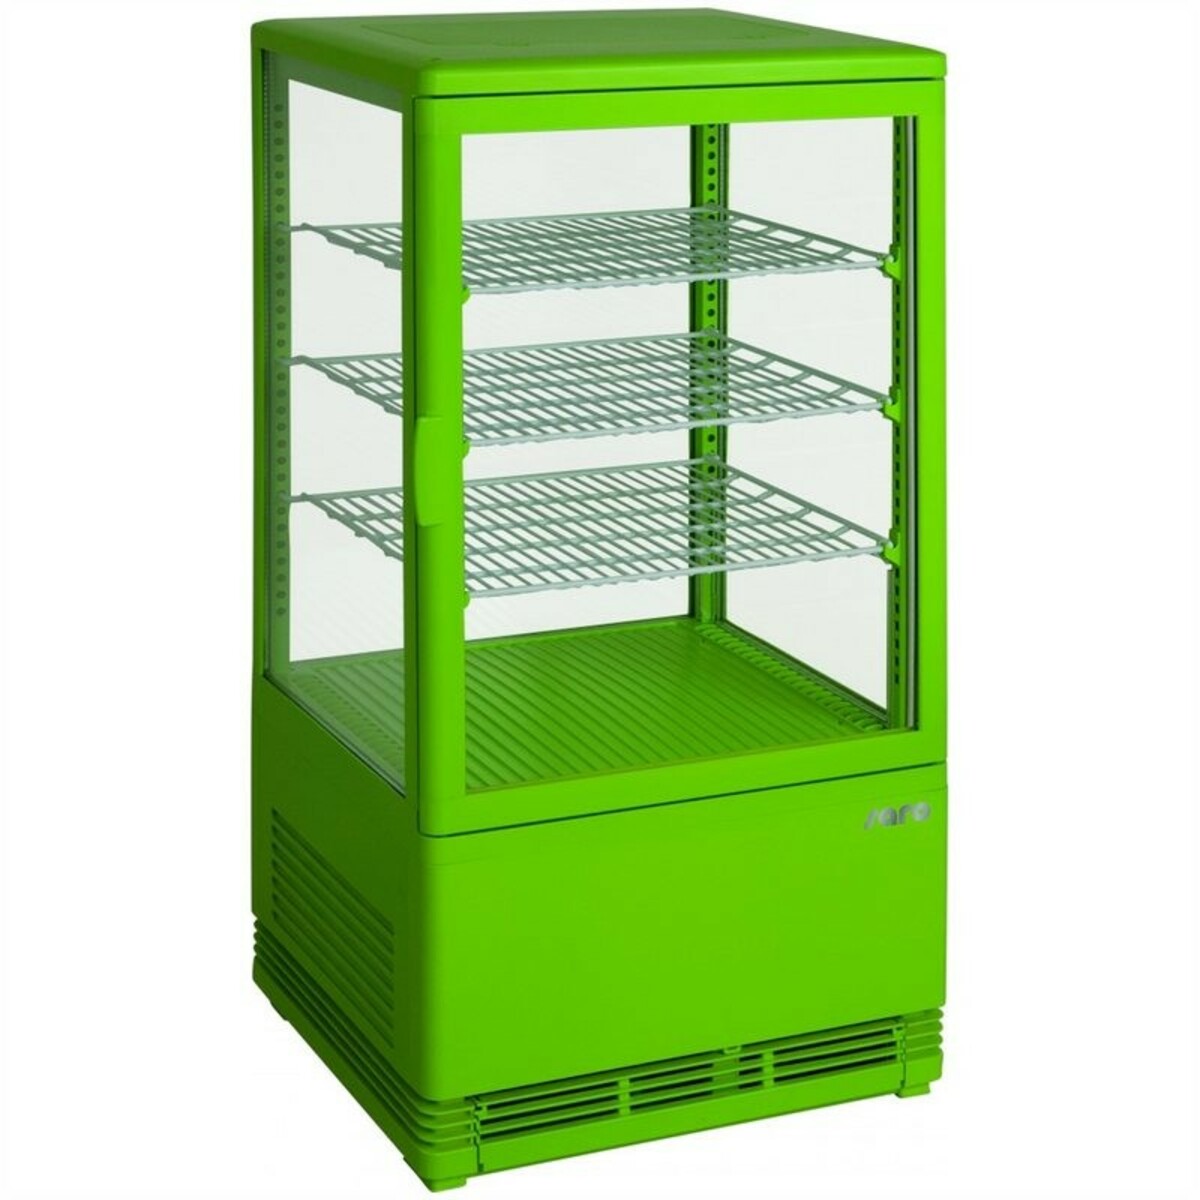 Mini vitrine verte réfrigérée 70 litres modèle SC70